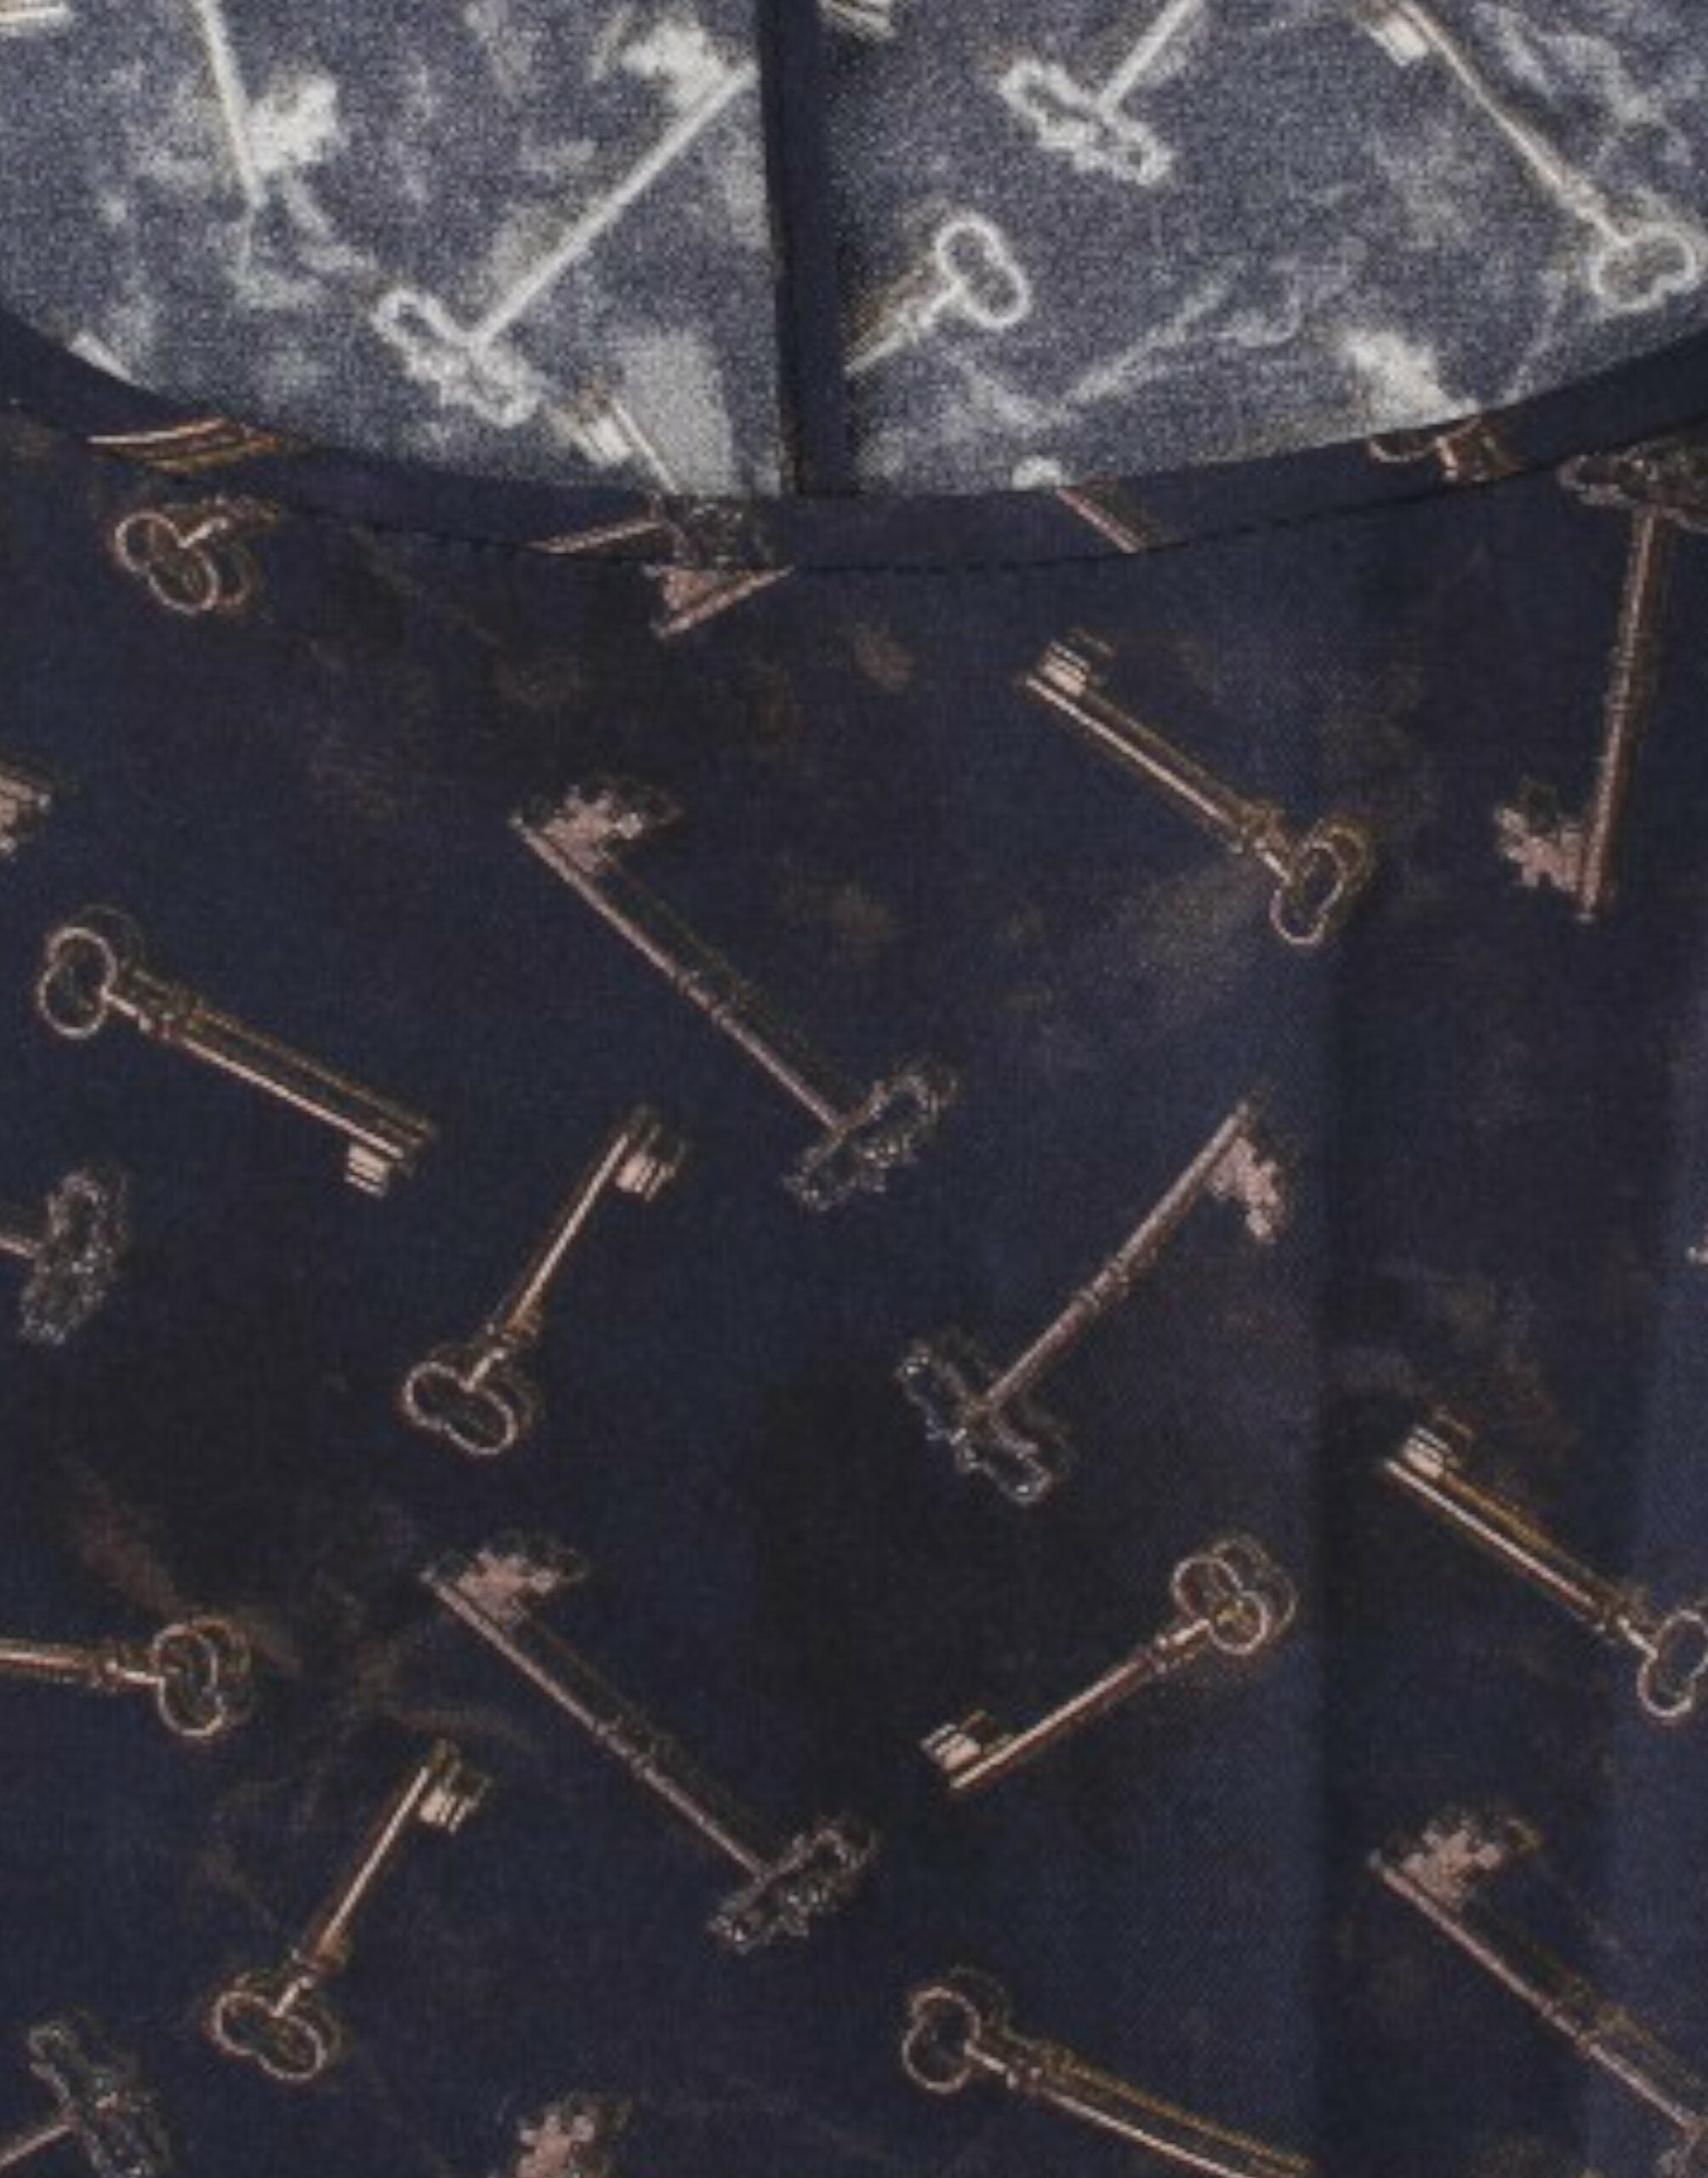 Dolce & Gabbana Enchanted Sicily Silk Blouse with Gold Keys Print